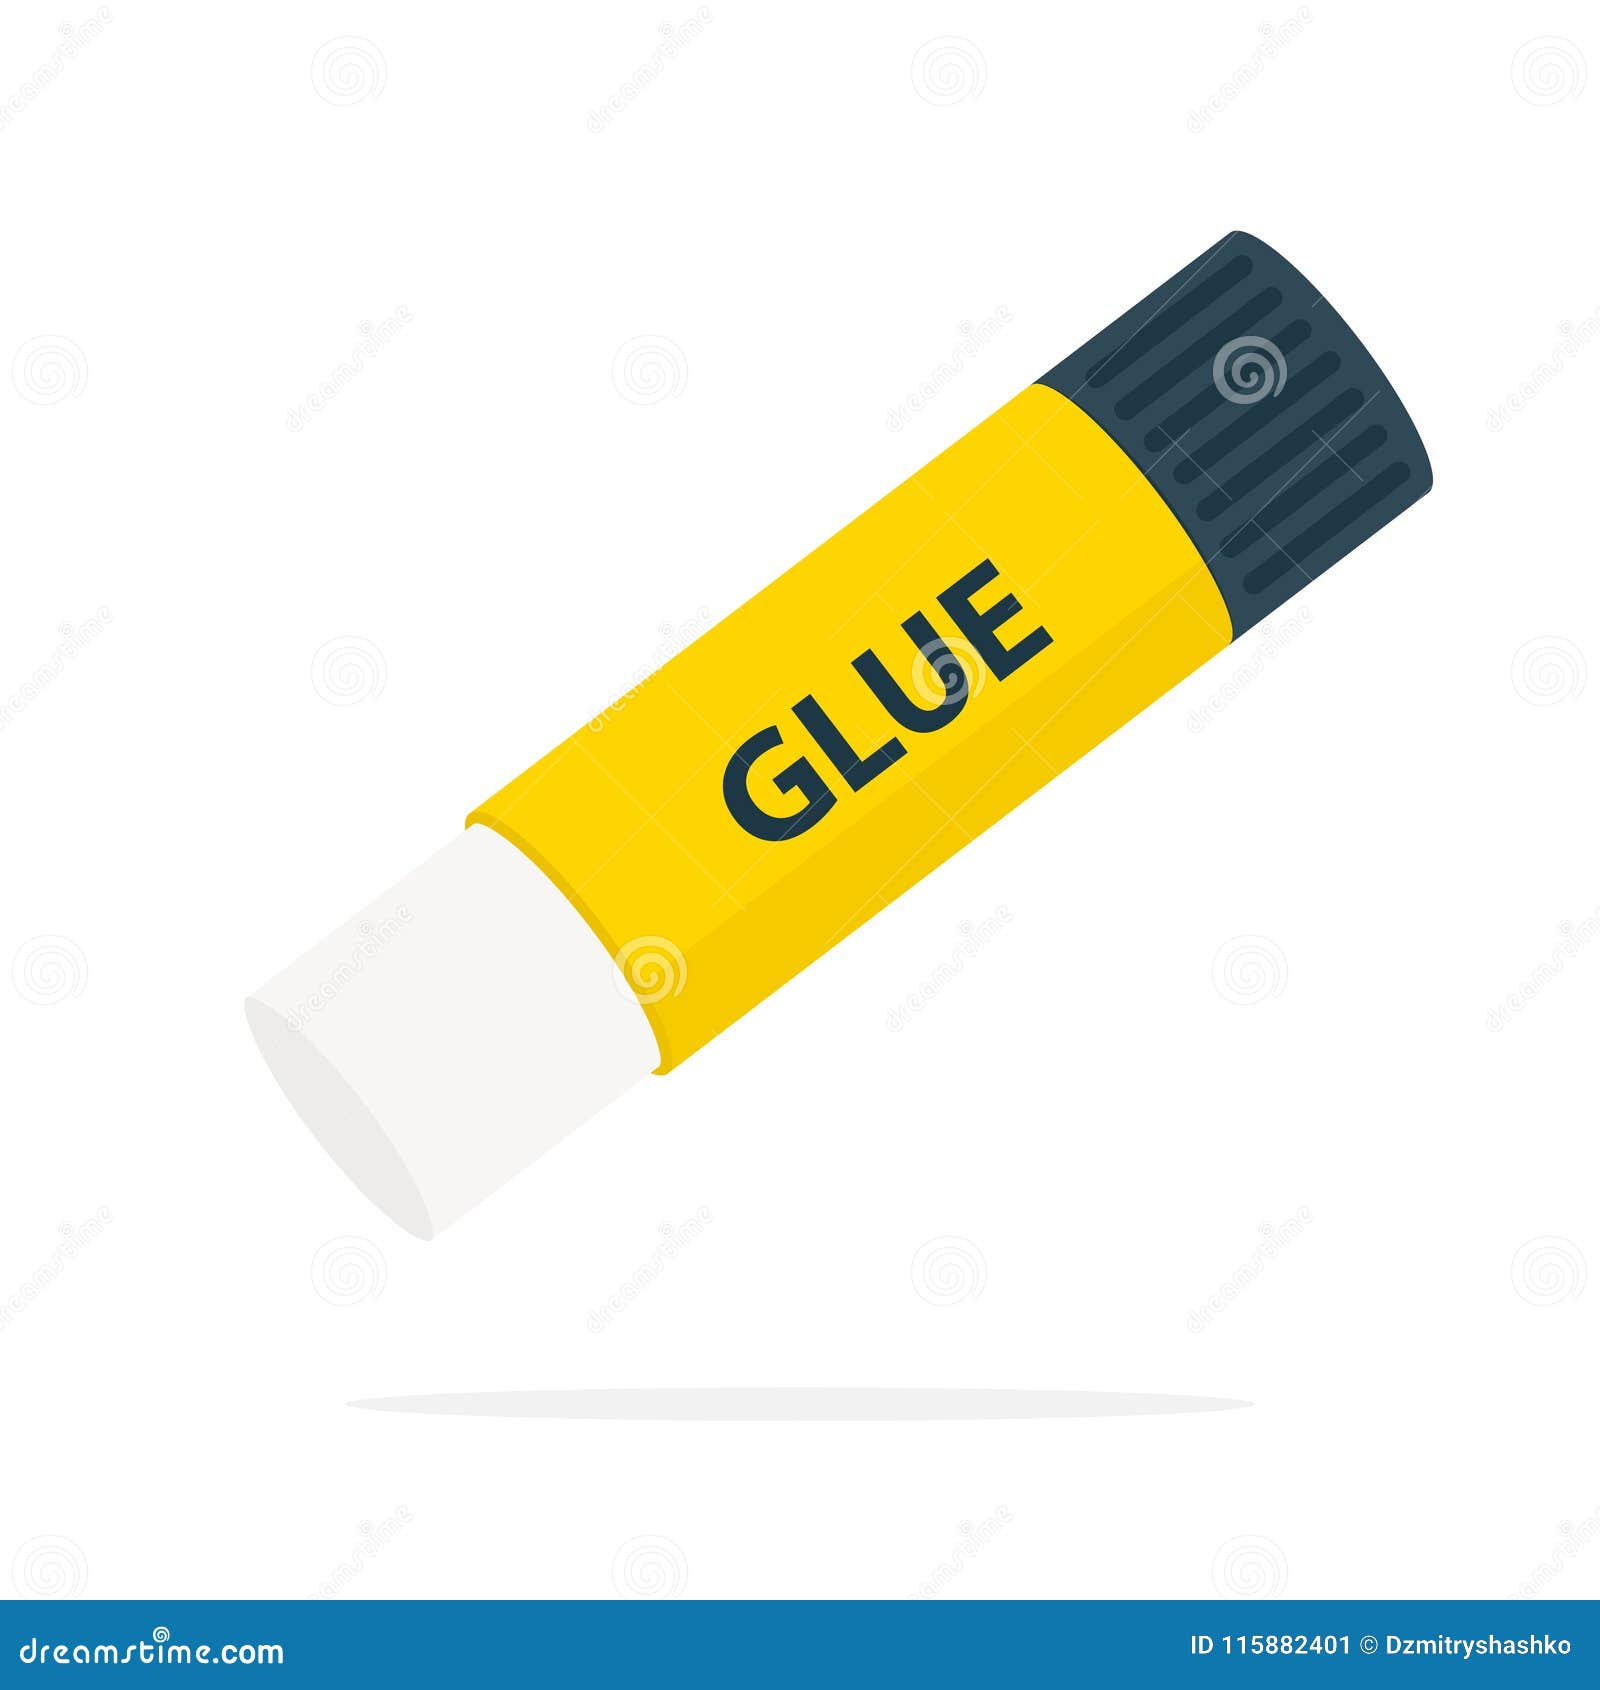 Gluestick Stock Illustrations – 101 Gluestick Stock Illustrations